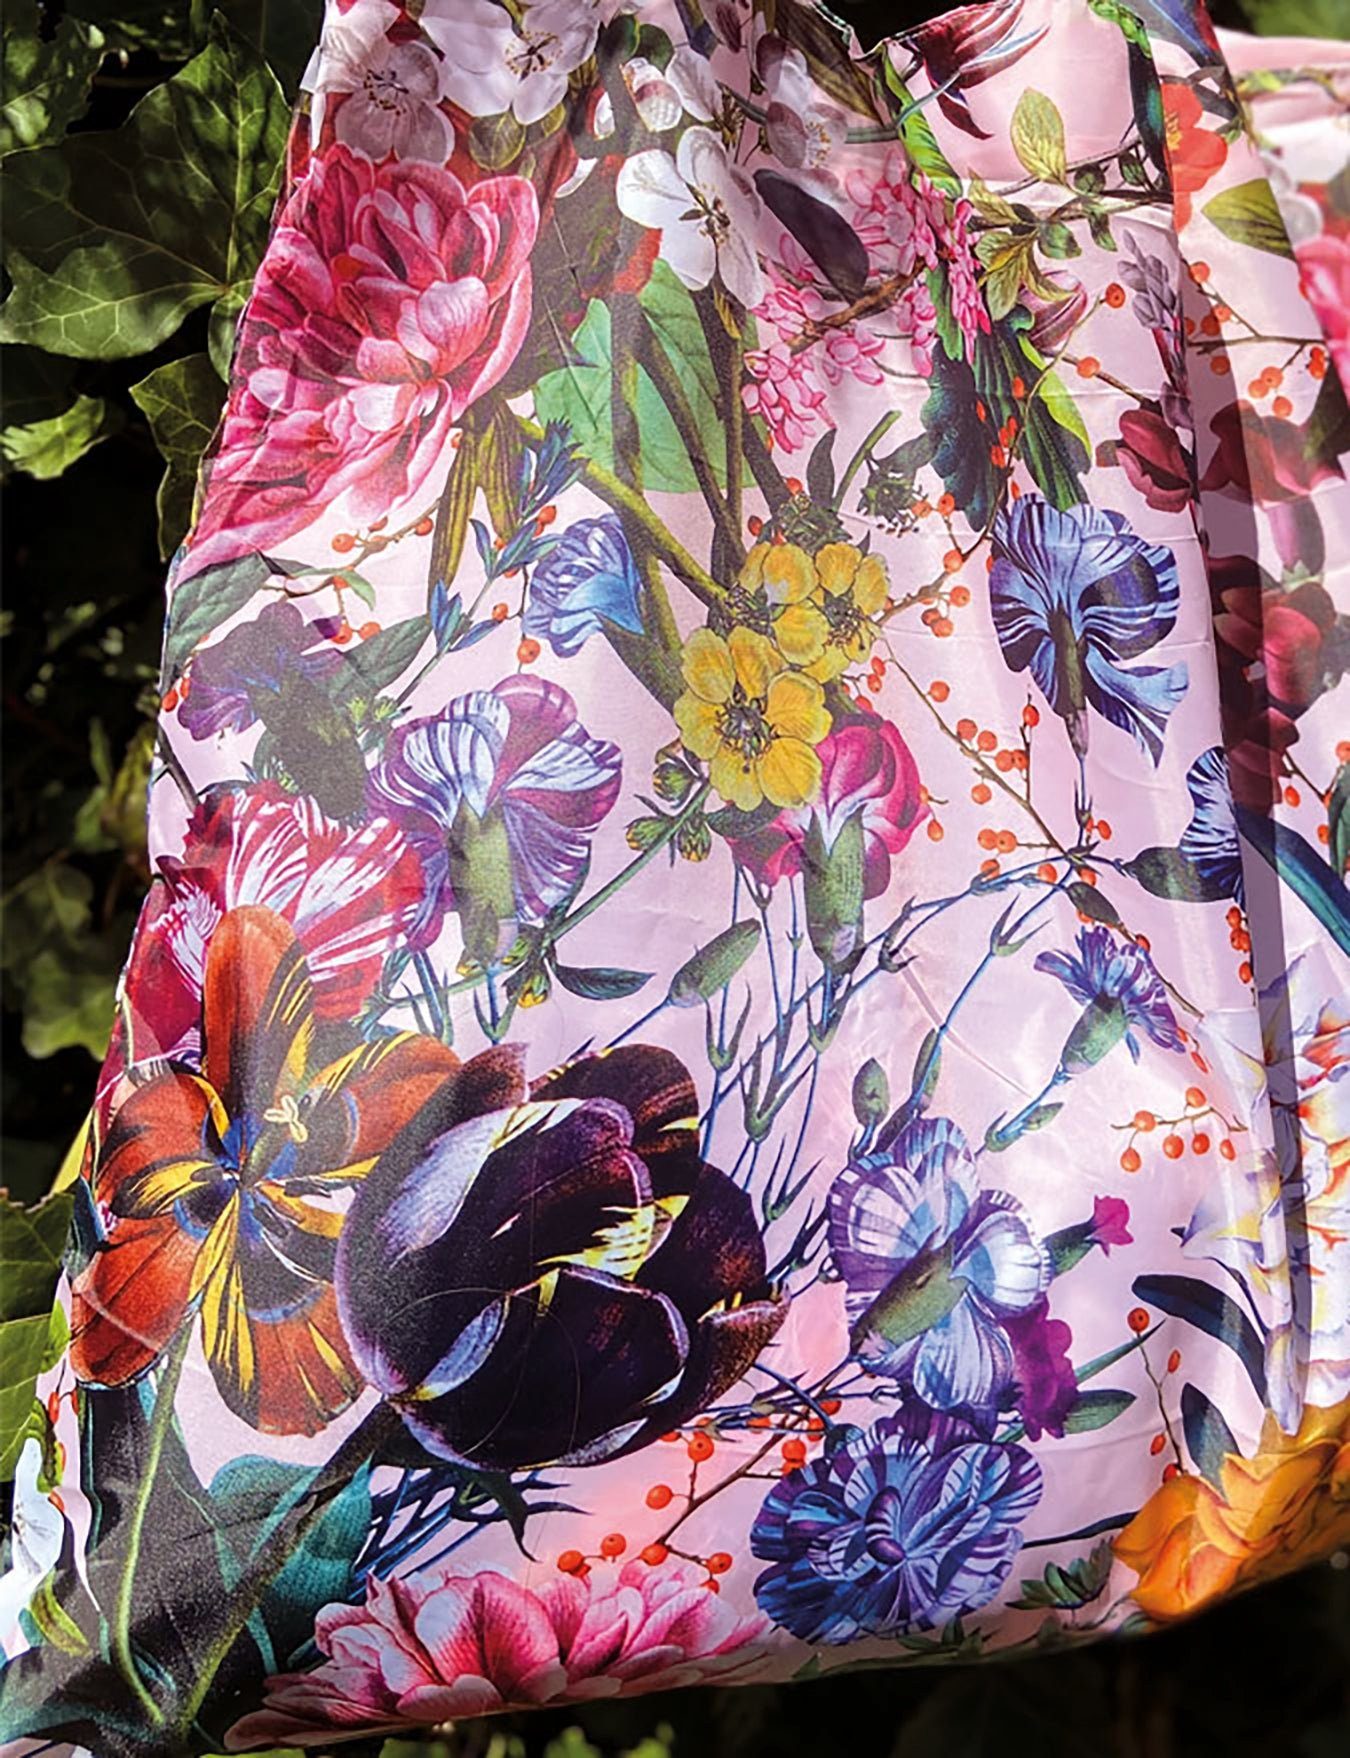 Cedon Museum Shops Einkaufsbeutel Easy Blumengruß Bag XL